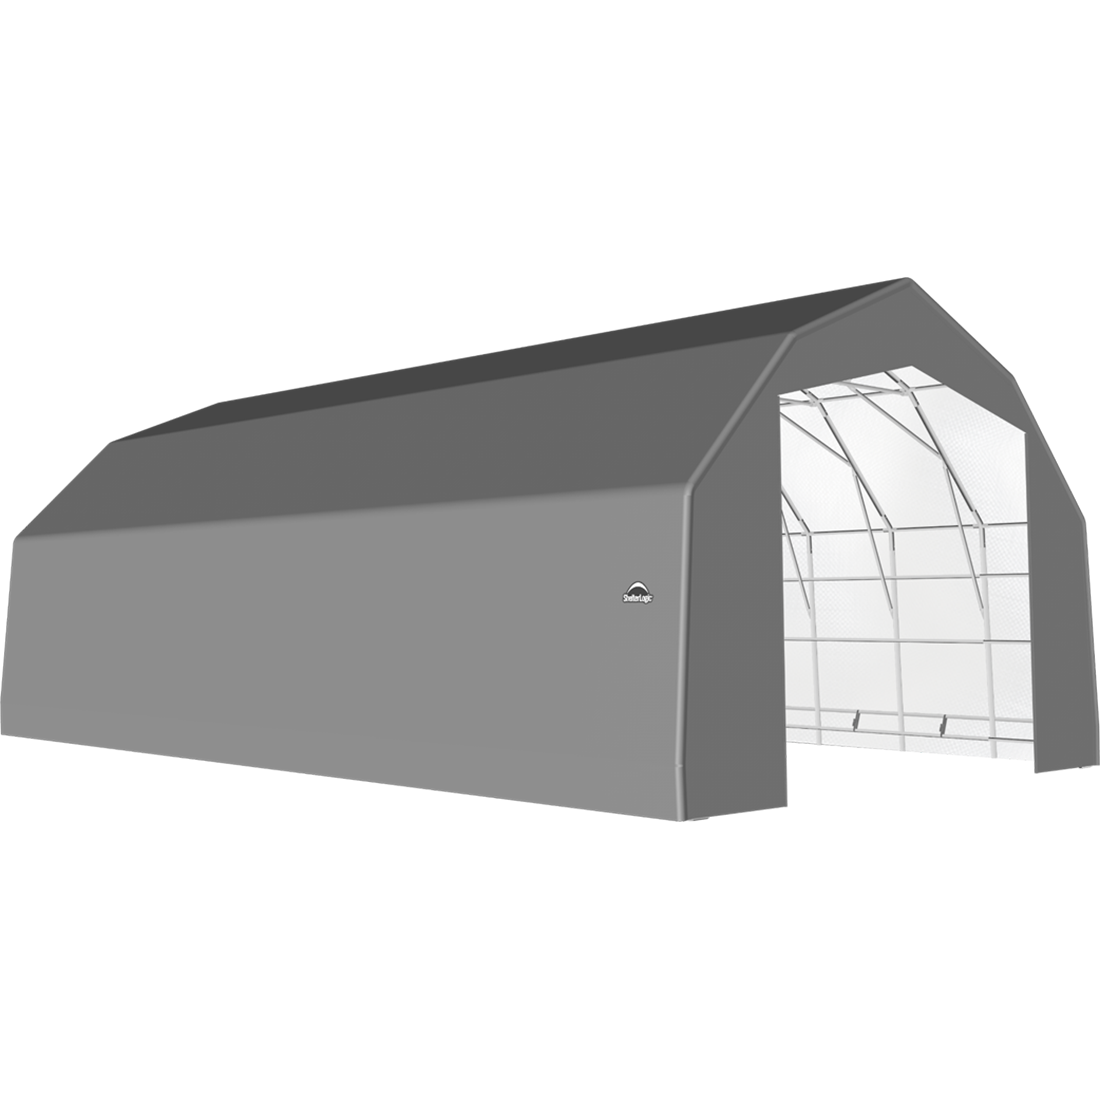 ShelterTech SP Series Barn Shelter, 25 ft. x 44 ft. x 17 ft. Heavy Duty PVC 14.5 oz. Gray